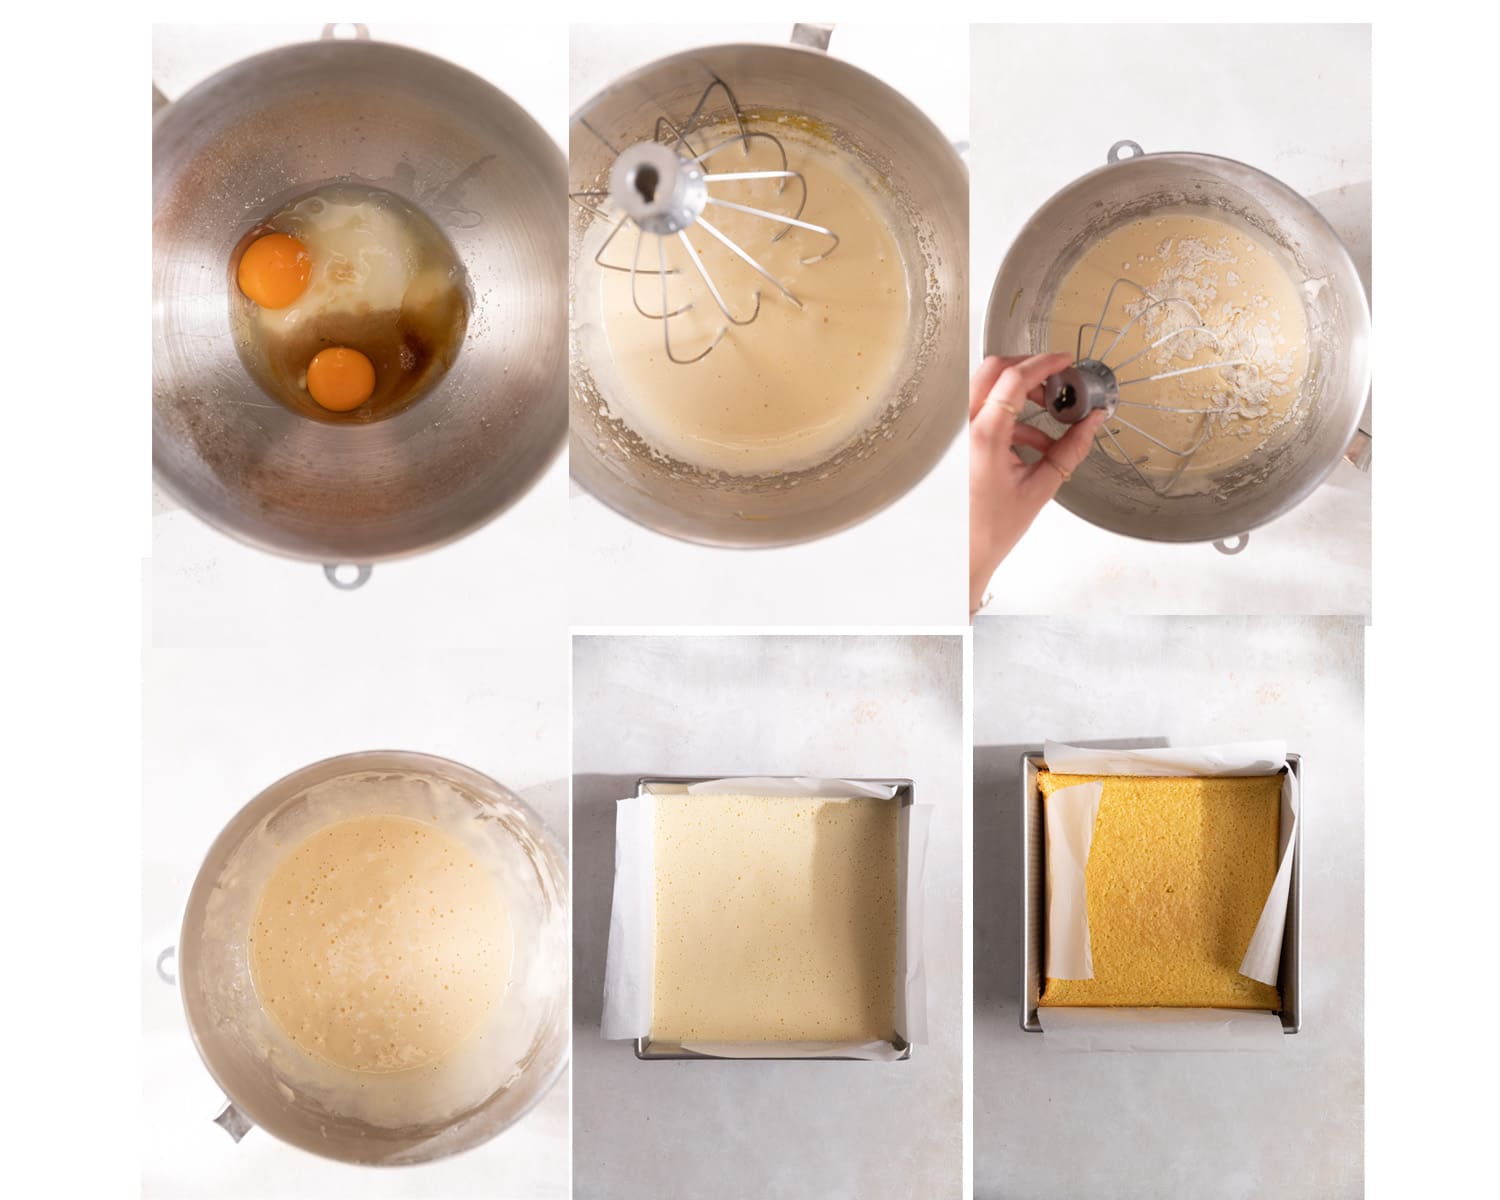 Vanilla cake process images.